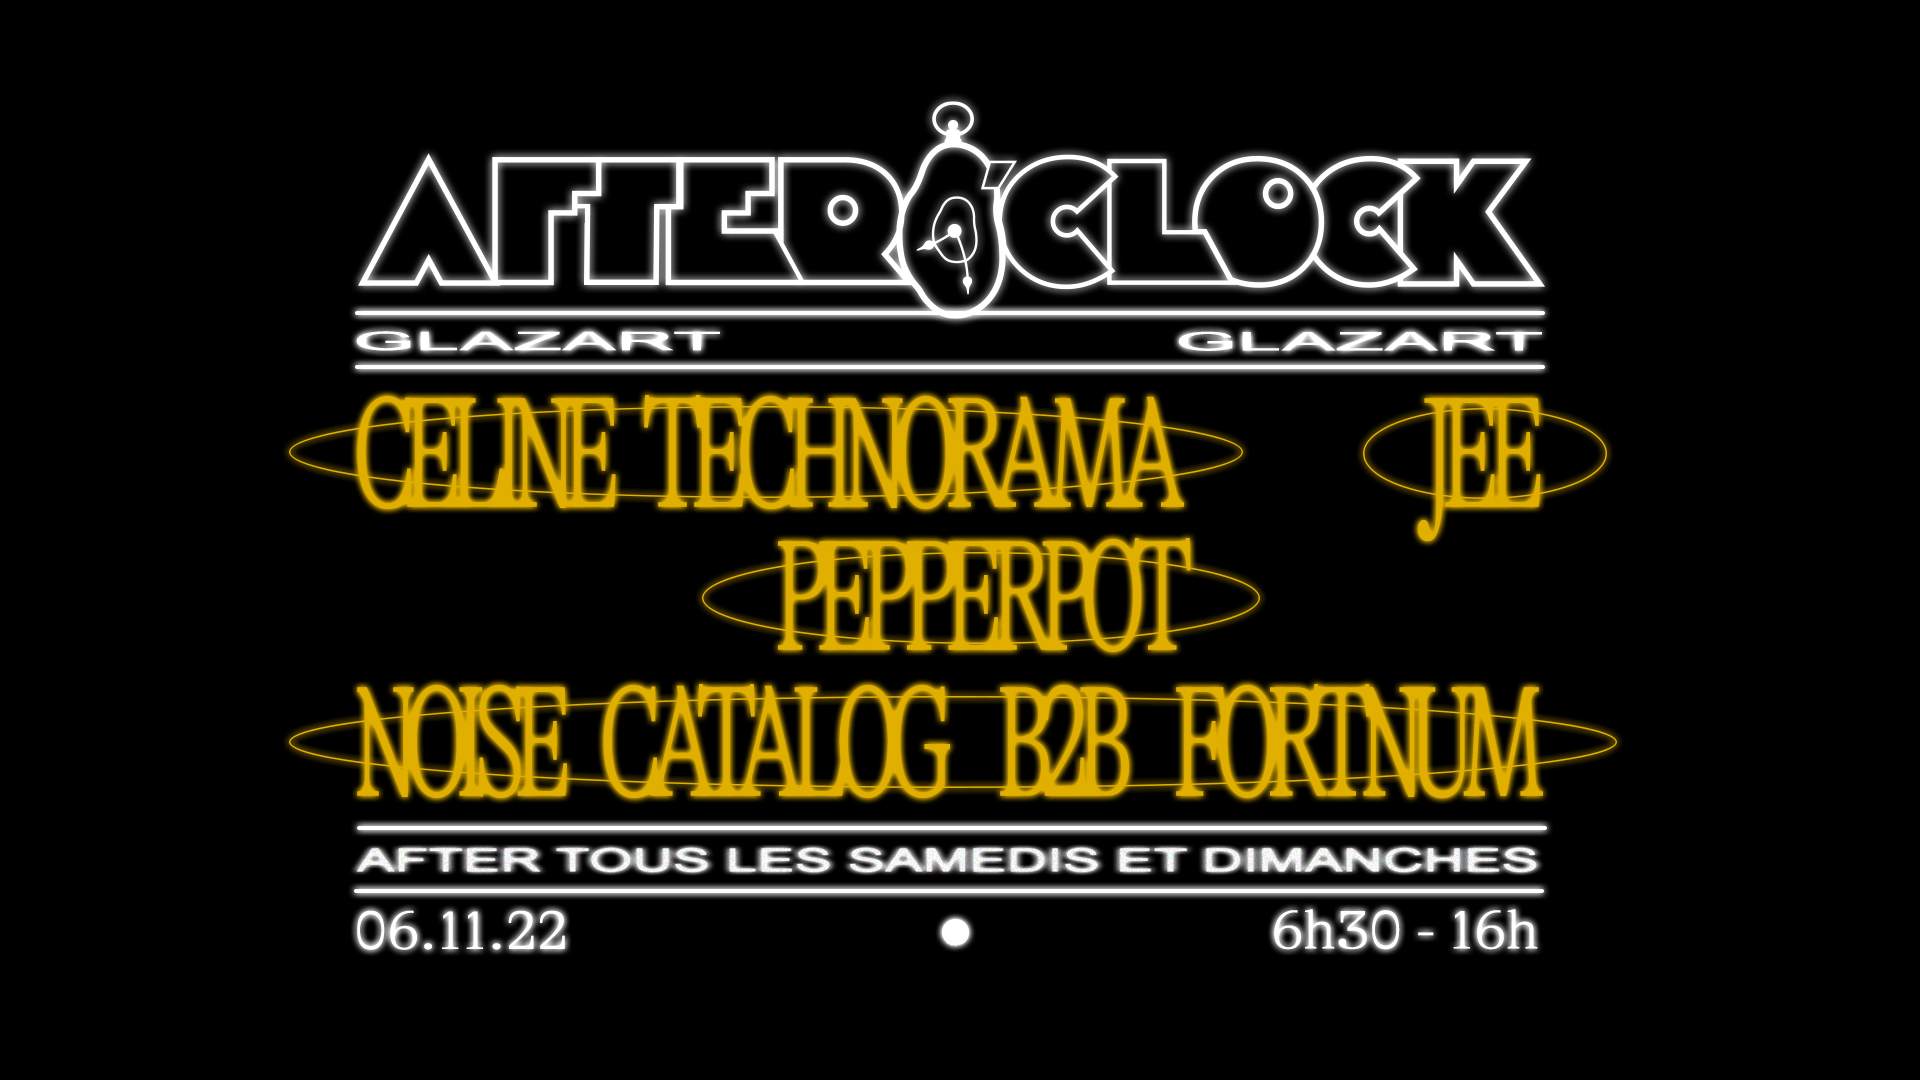 After O'Clock: Céline Technorama, Jee, Noise Catalog B2B Fortnum, Pepperpot - Página frontal